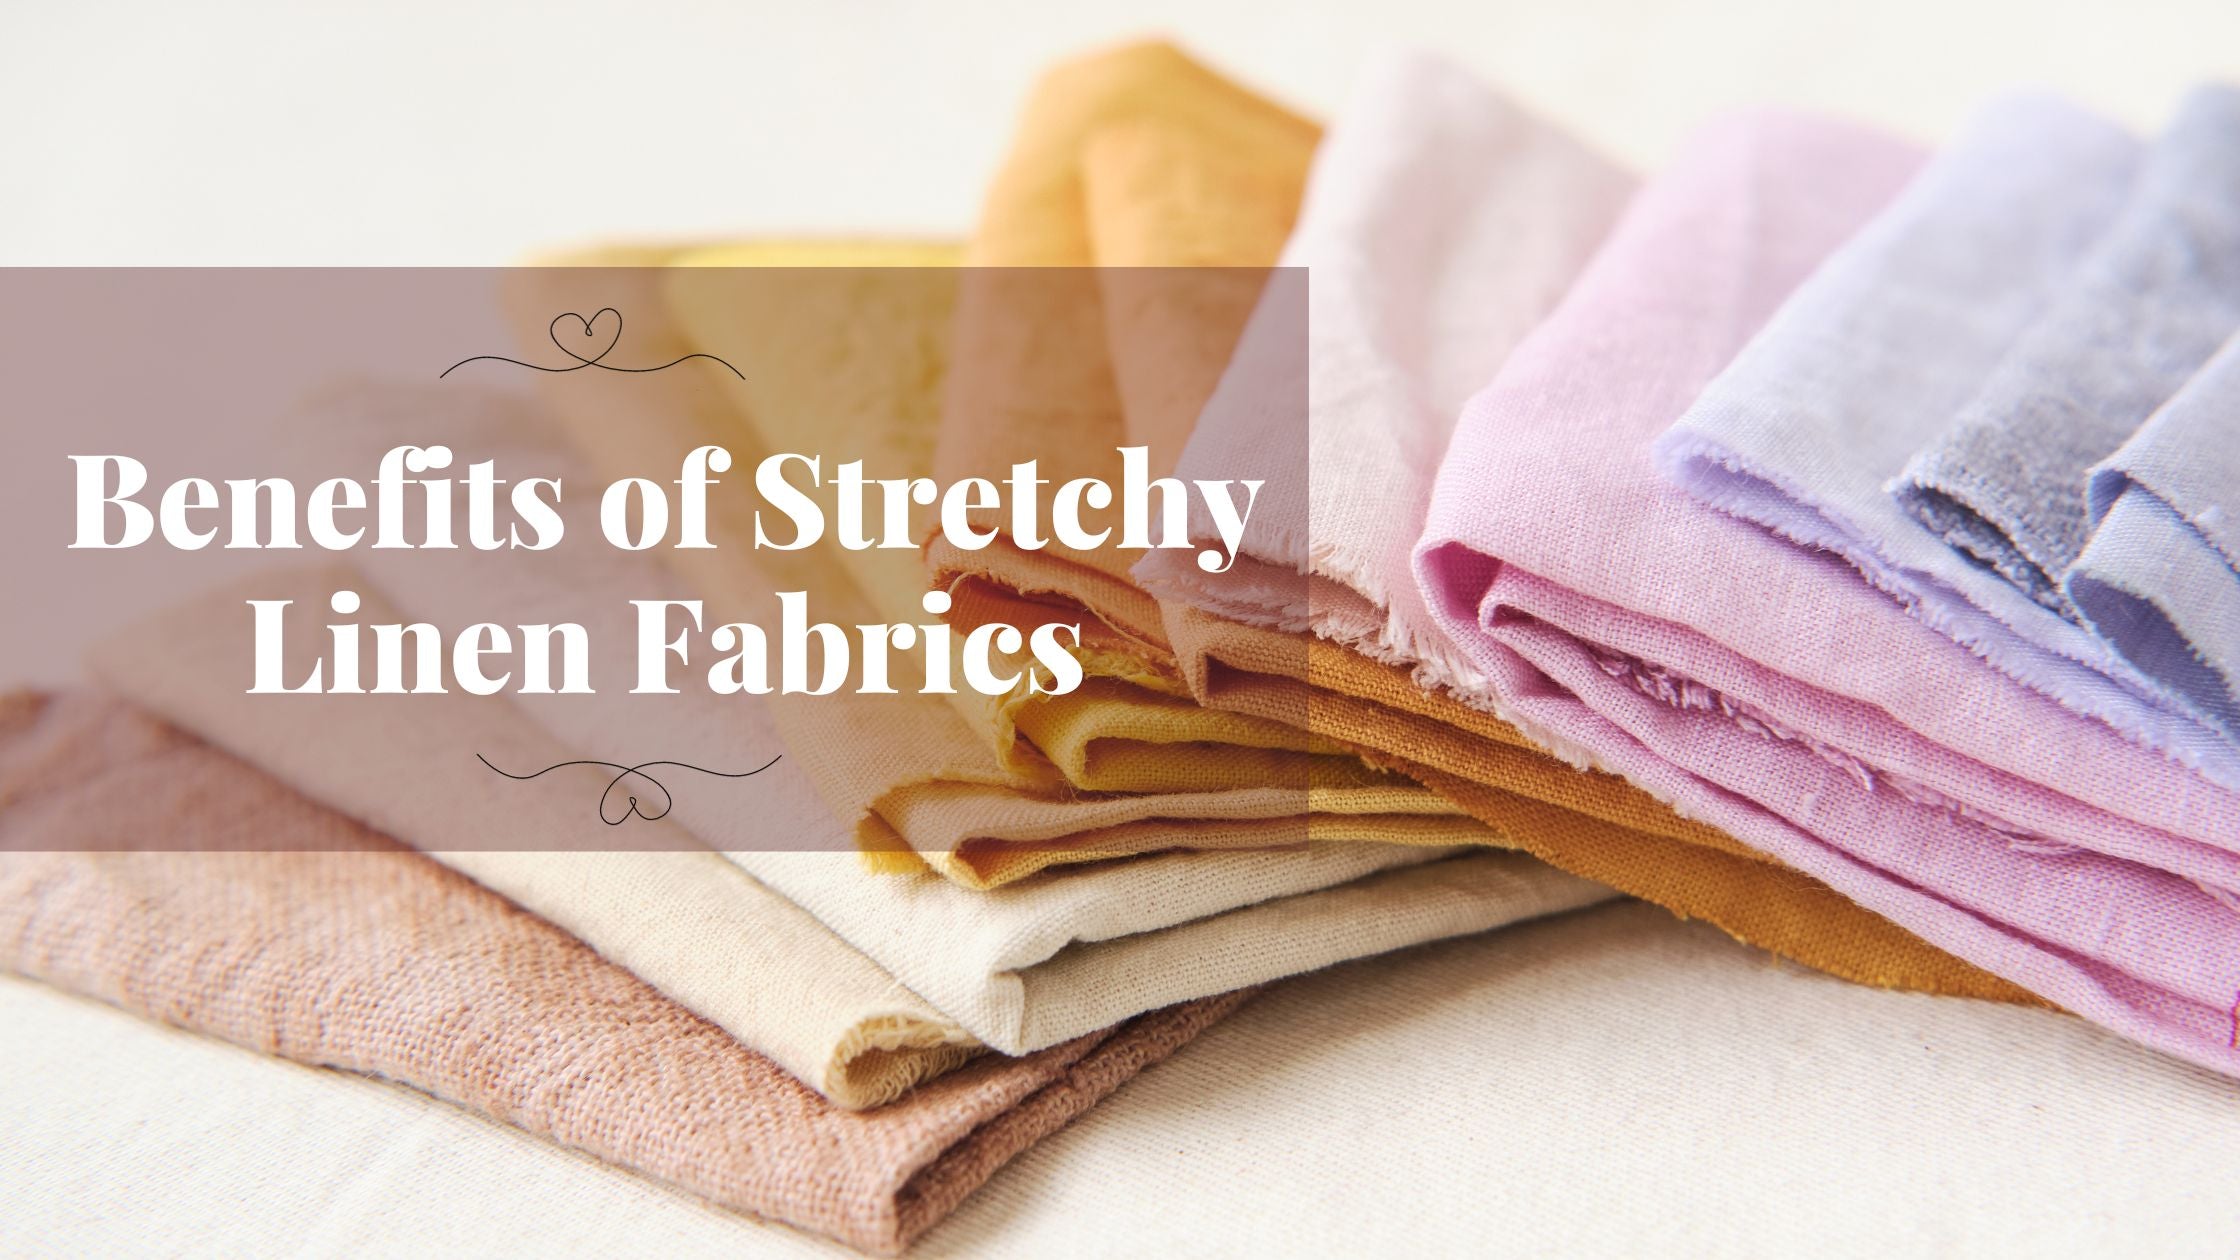 Benefits of Stretchy Linen Fabrics